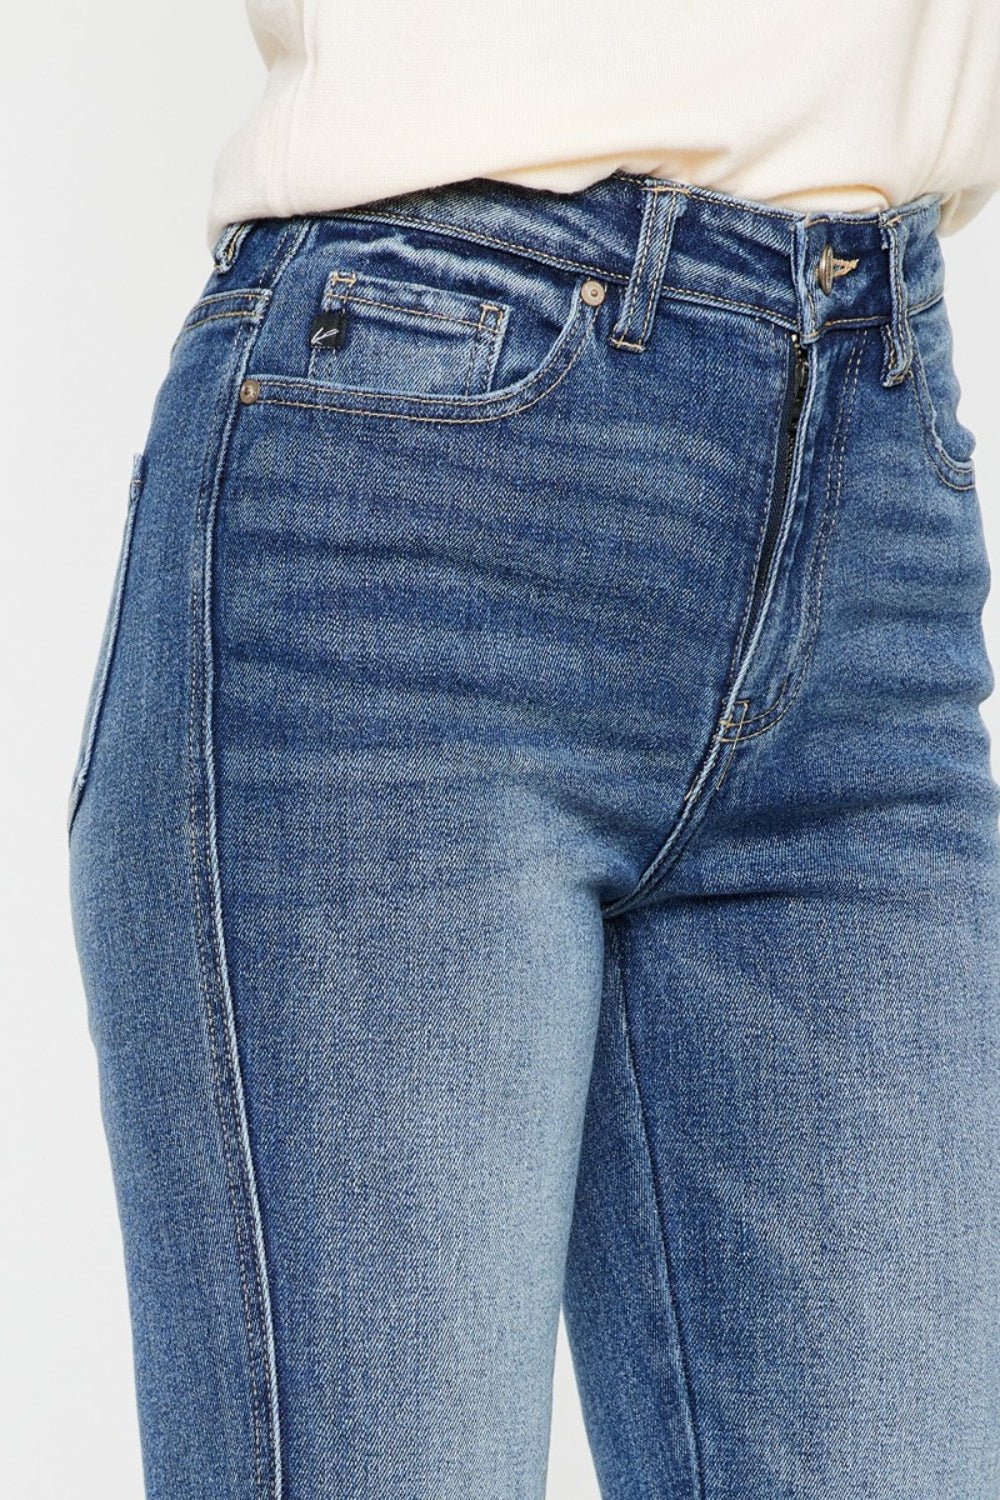 Medium Wash Distressed High Waist Flare JeansJeansKancan